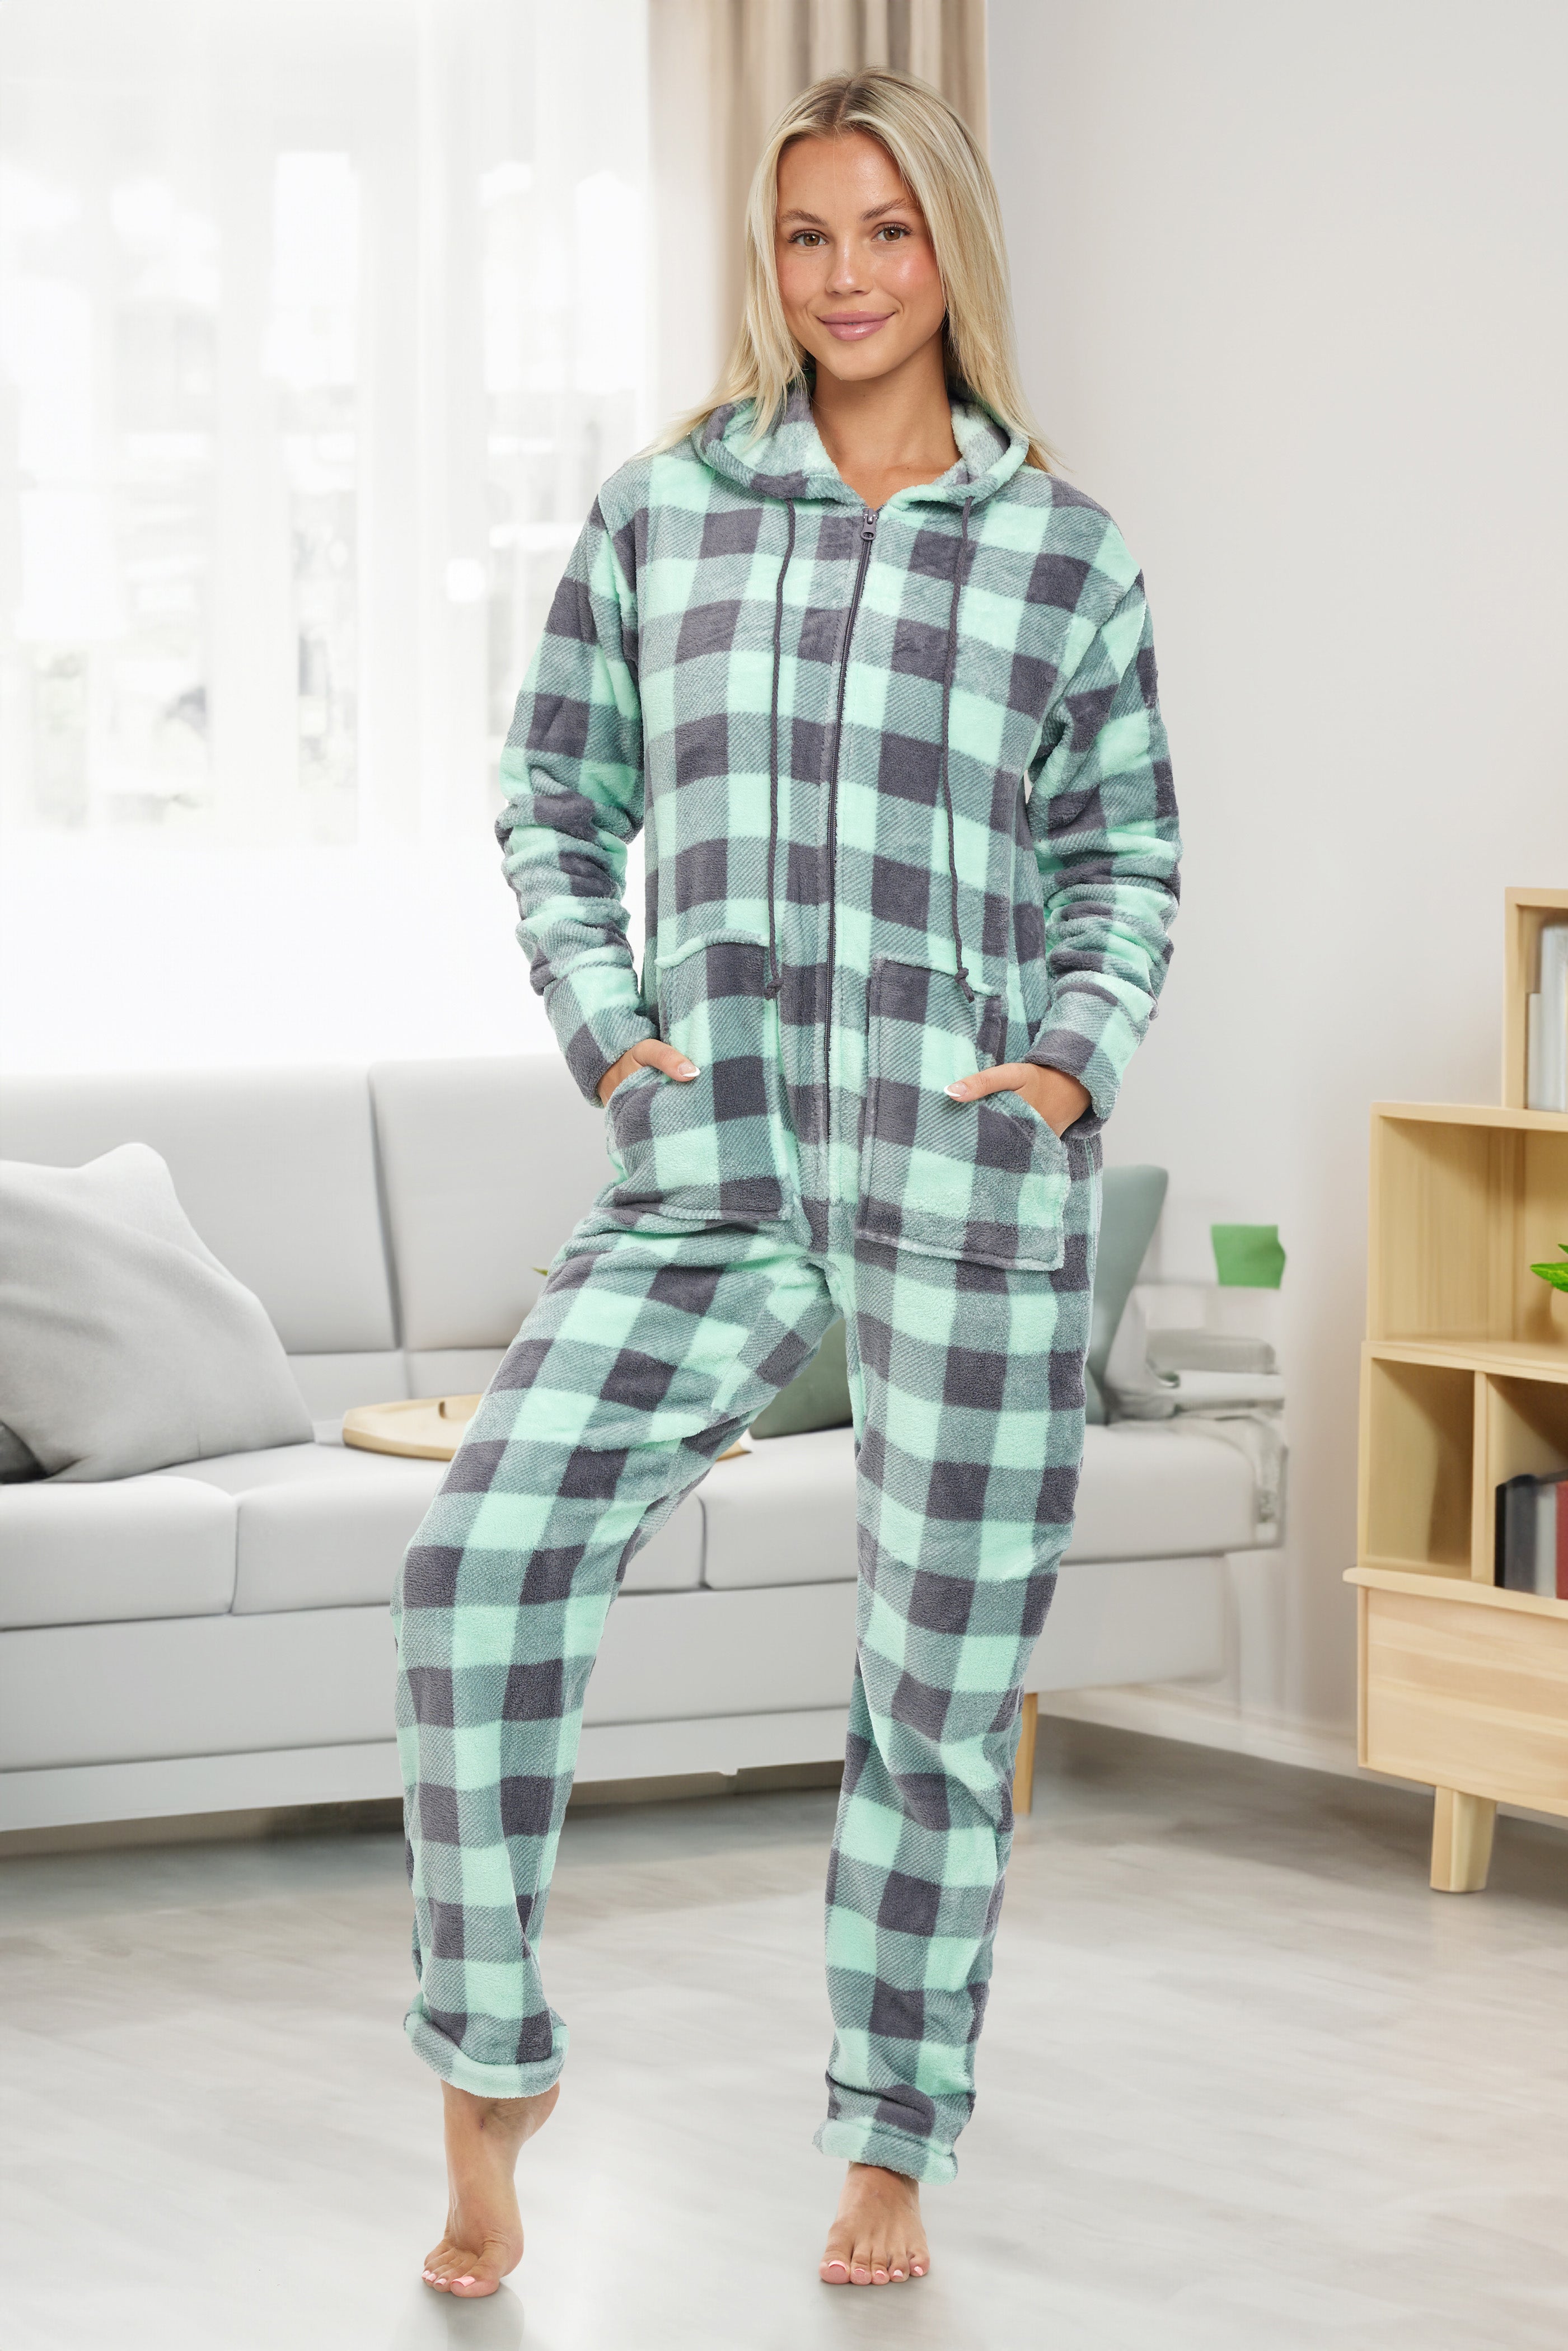 Women's Warm Fleece One Piece Hooded Footed Zipper Pajamas, Soft Adult  Onesie Footie with Hood for Winter – Alexander Del Rossa